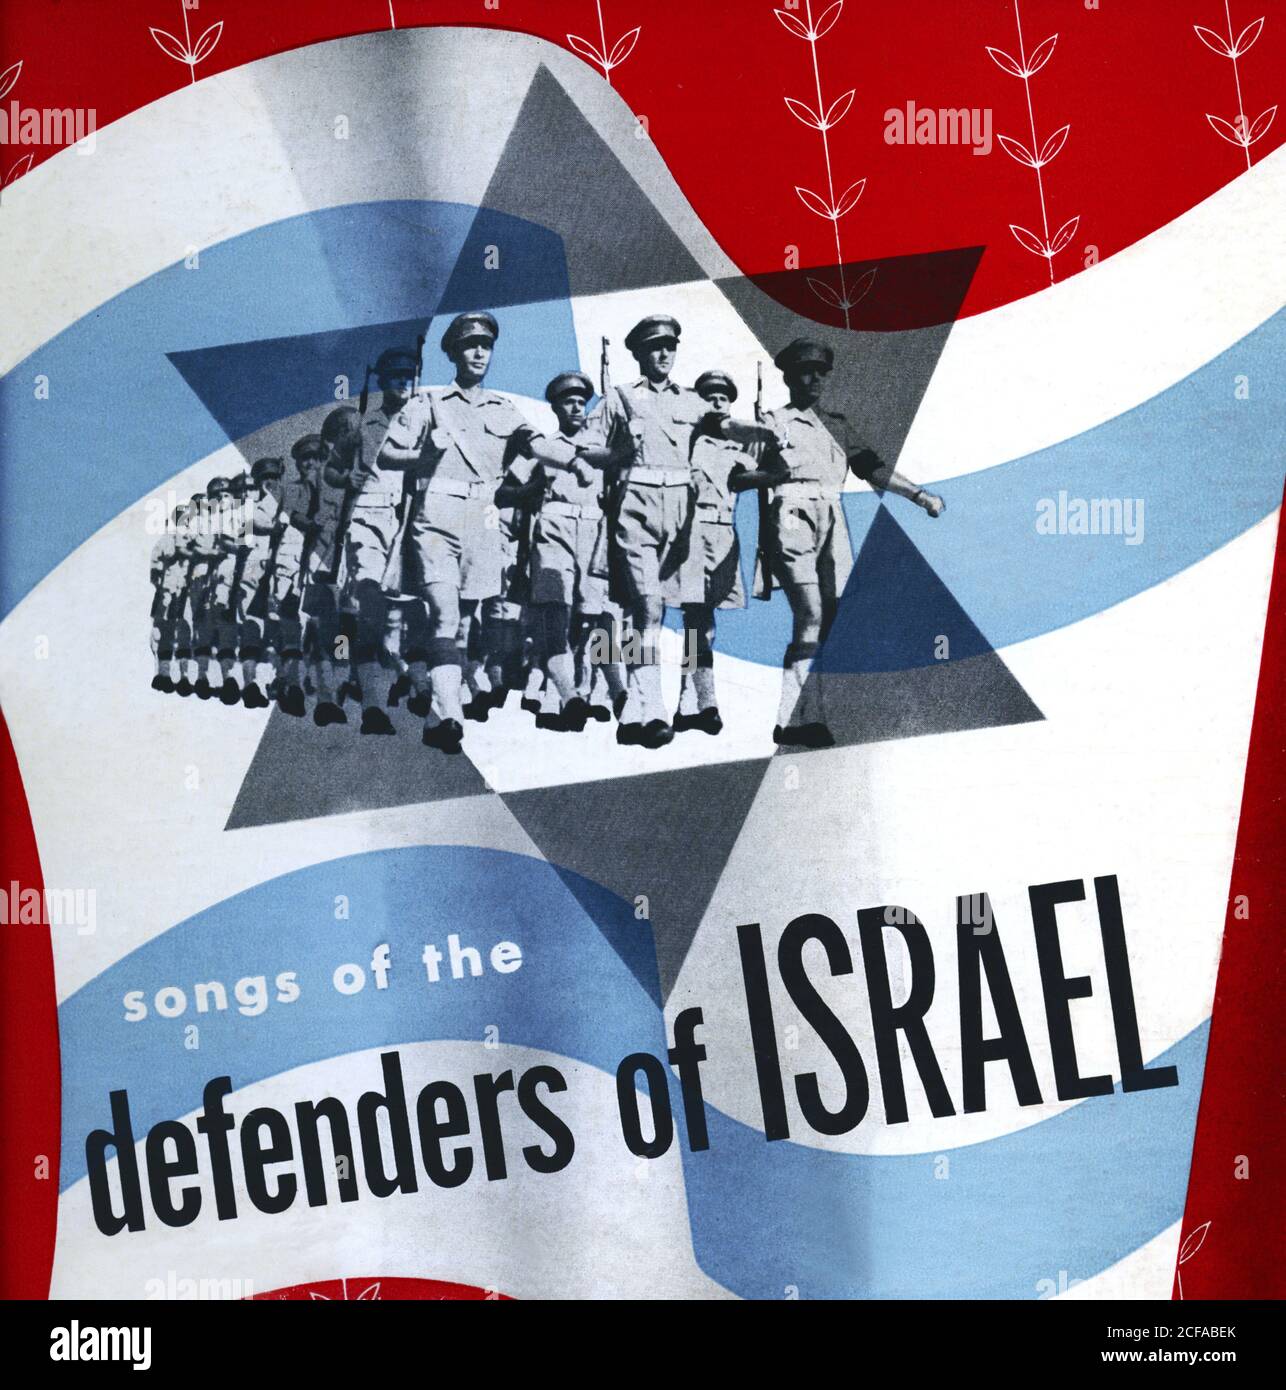 Songs of the defenders of Israel Stock Photo